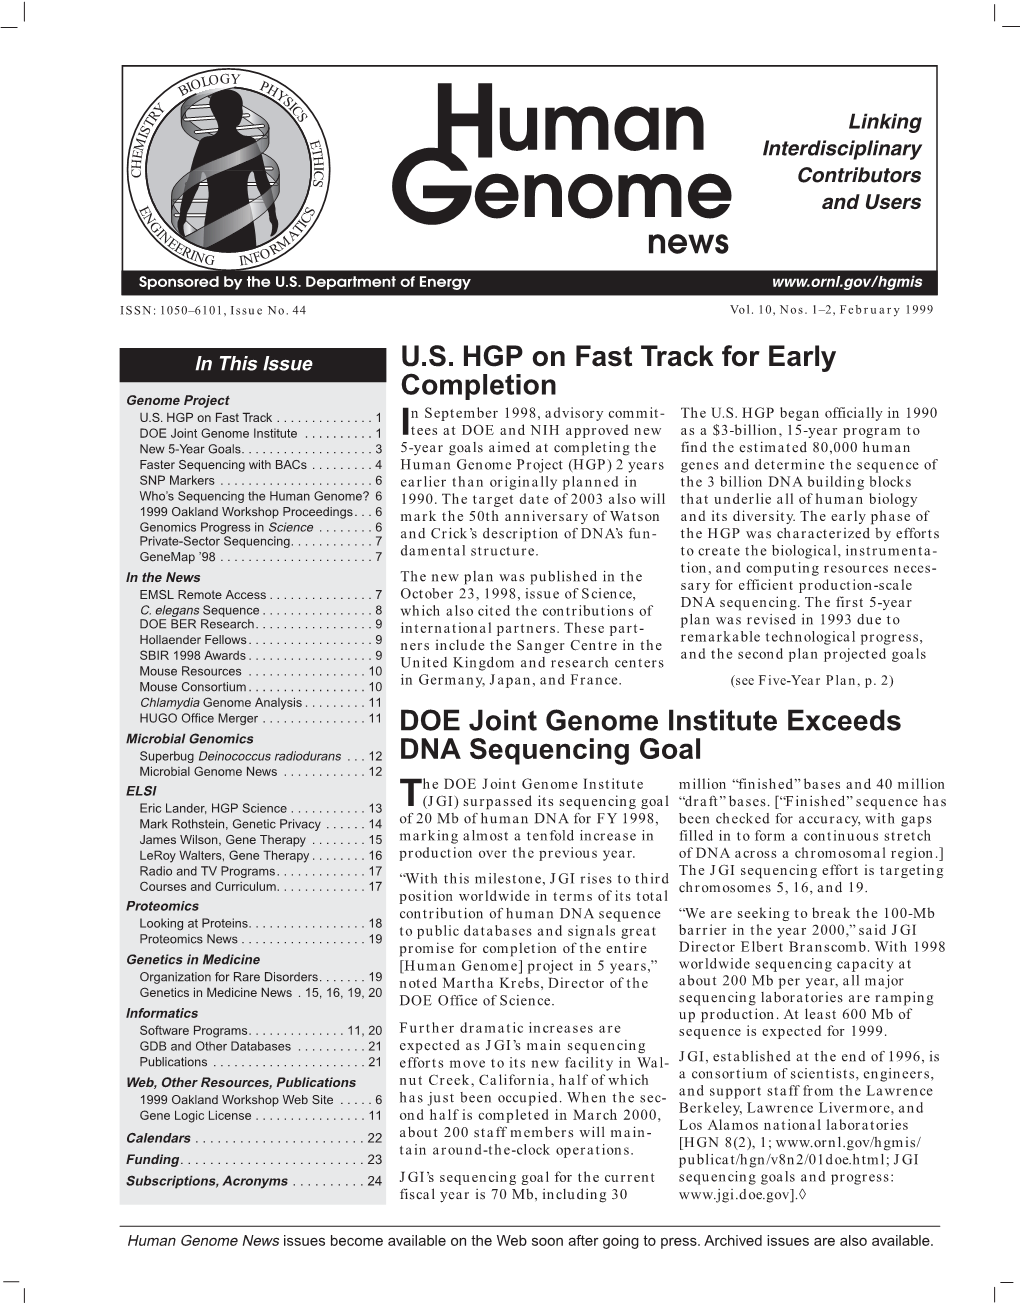 DOE Joint Genome Institute Exceeds DNA Sequencing Goal U.S. HGP